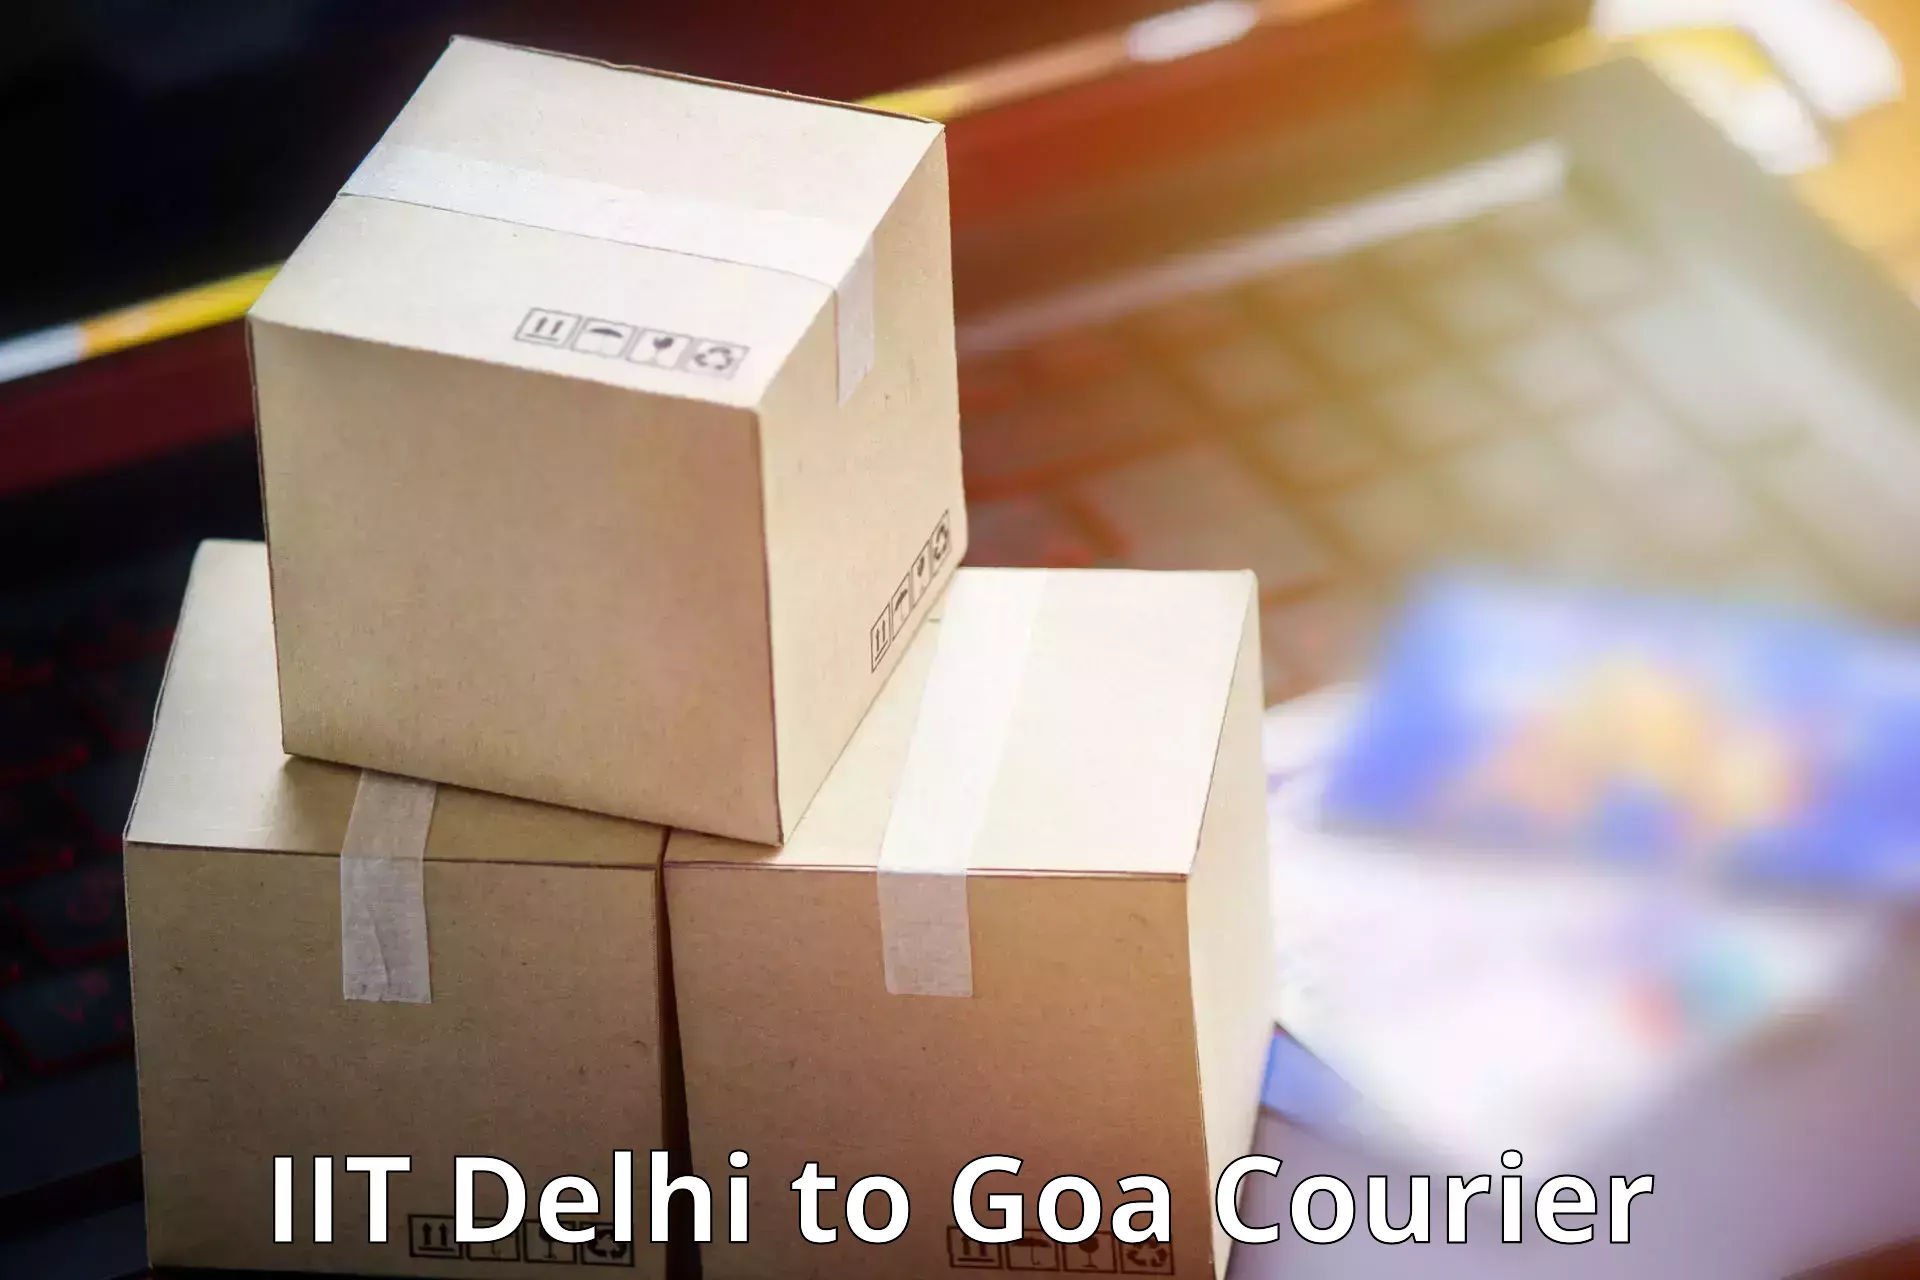 Courier service comparison IIT Delhi to Margao